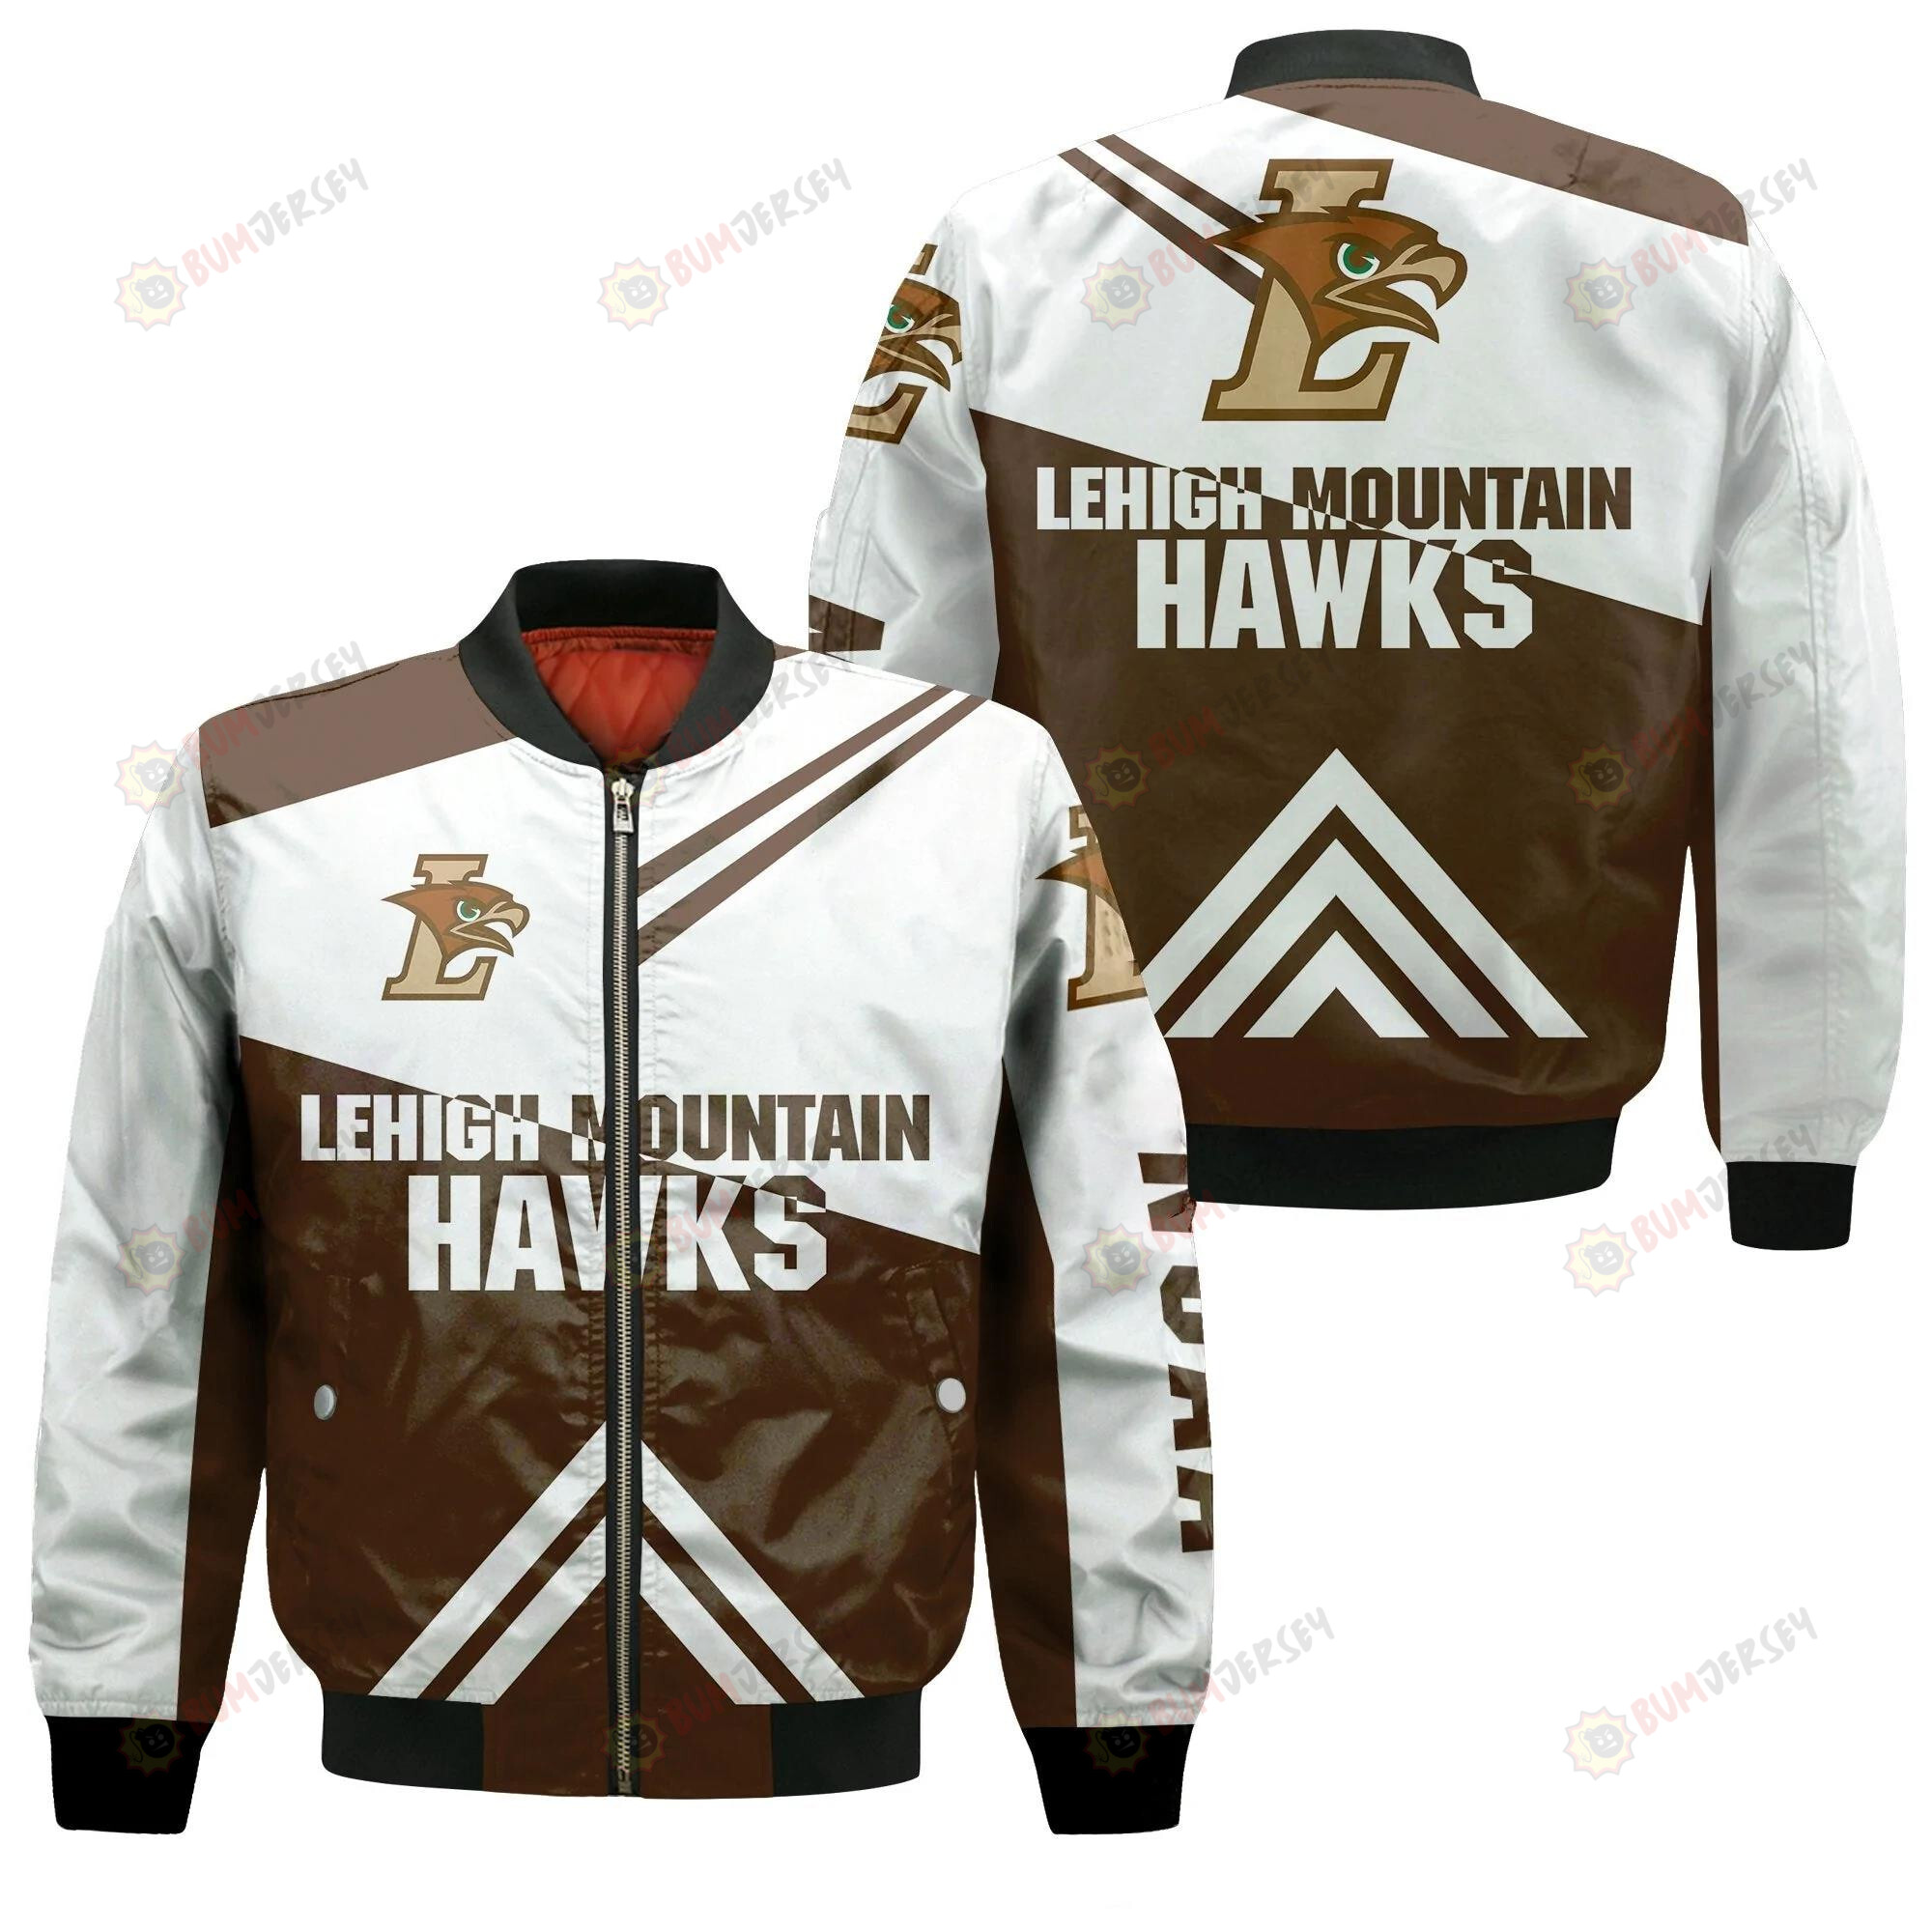 Lehigh Mountain Hawks Football Bomber Jacket 3D Printed - Stripes Cross Shoulders